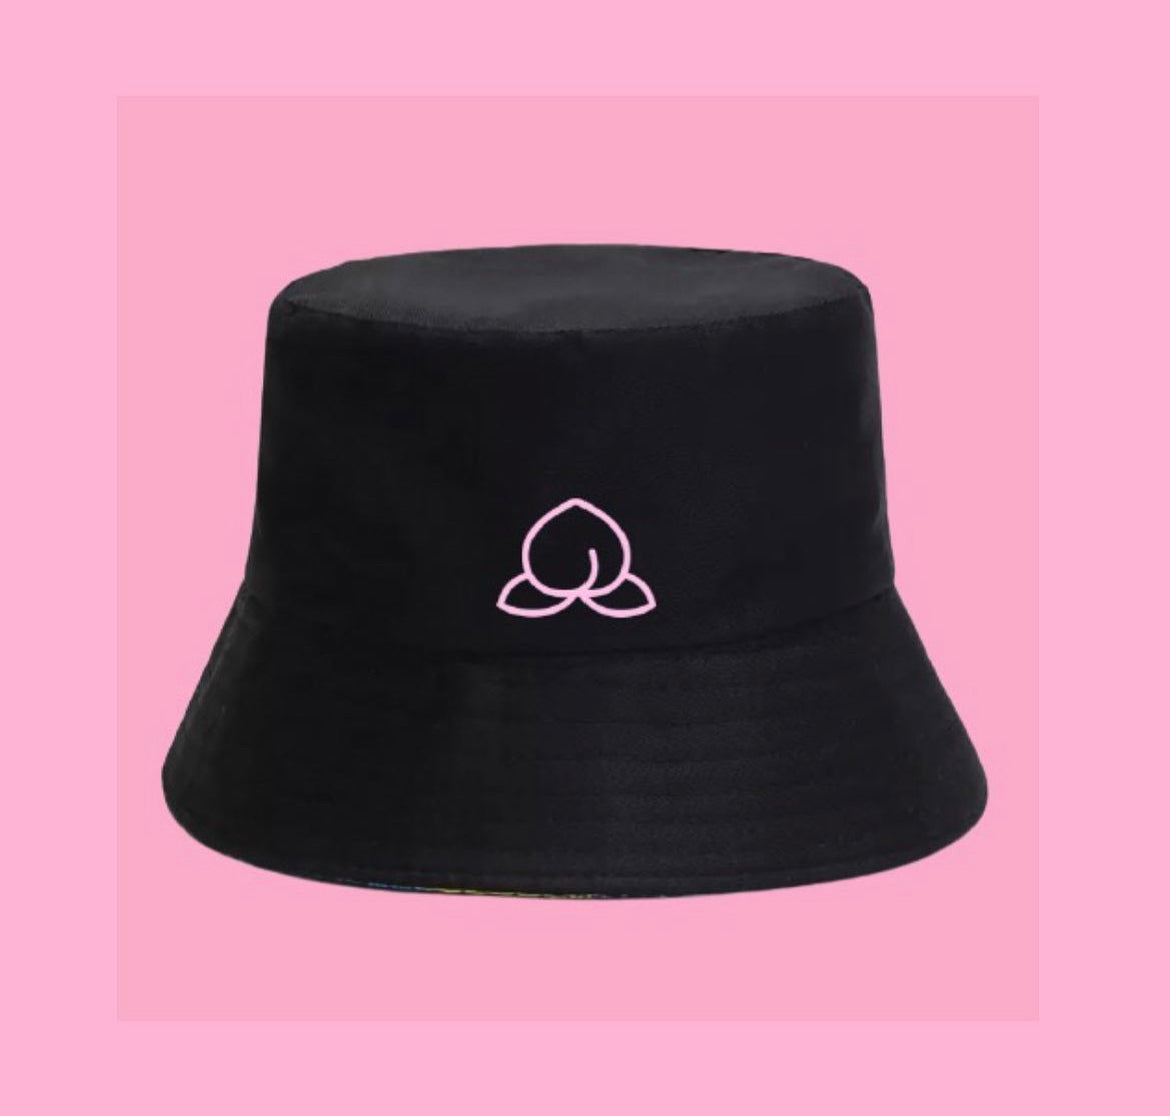 Zwarte vissershoedje buckethat met roze Bootyband logo.